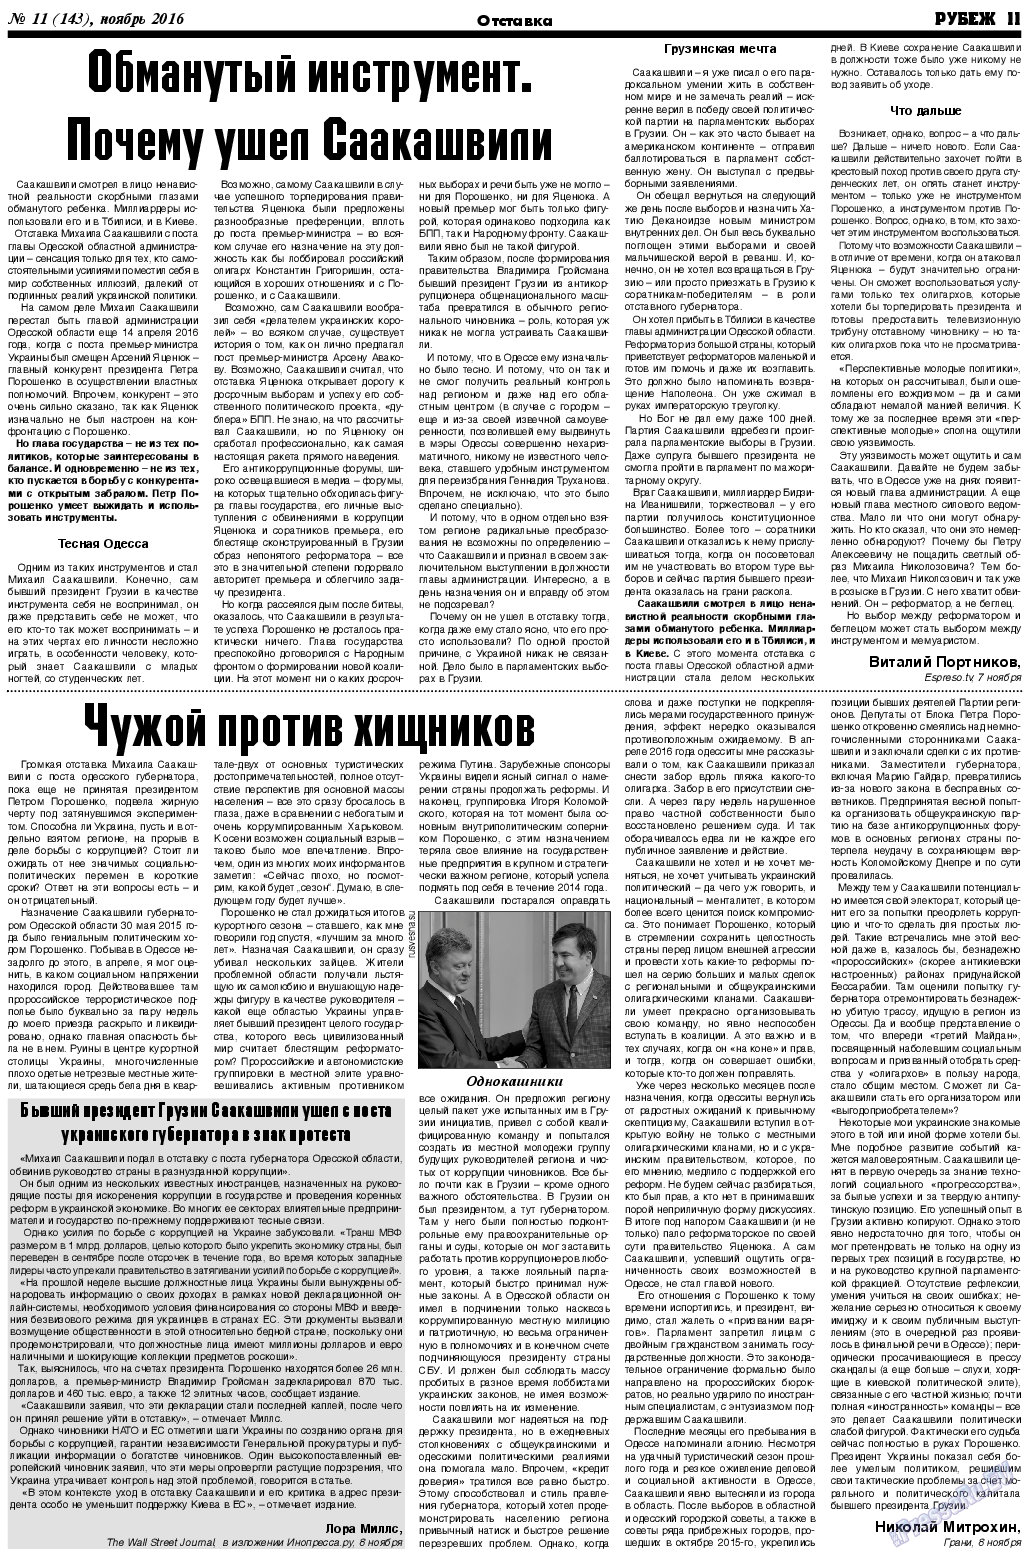 Рубеж, газета. 2016 №11 стр.11